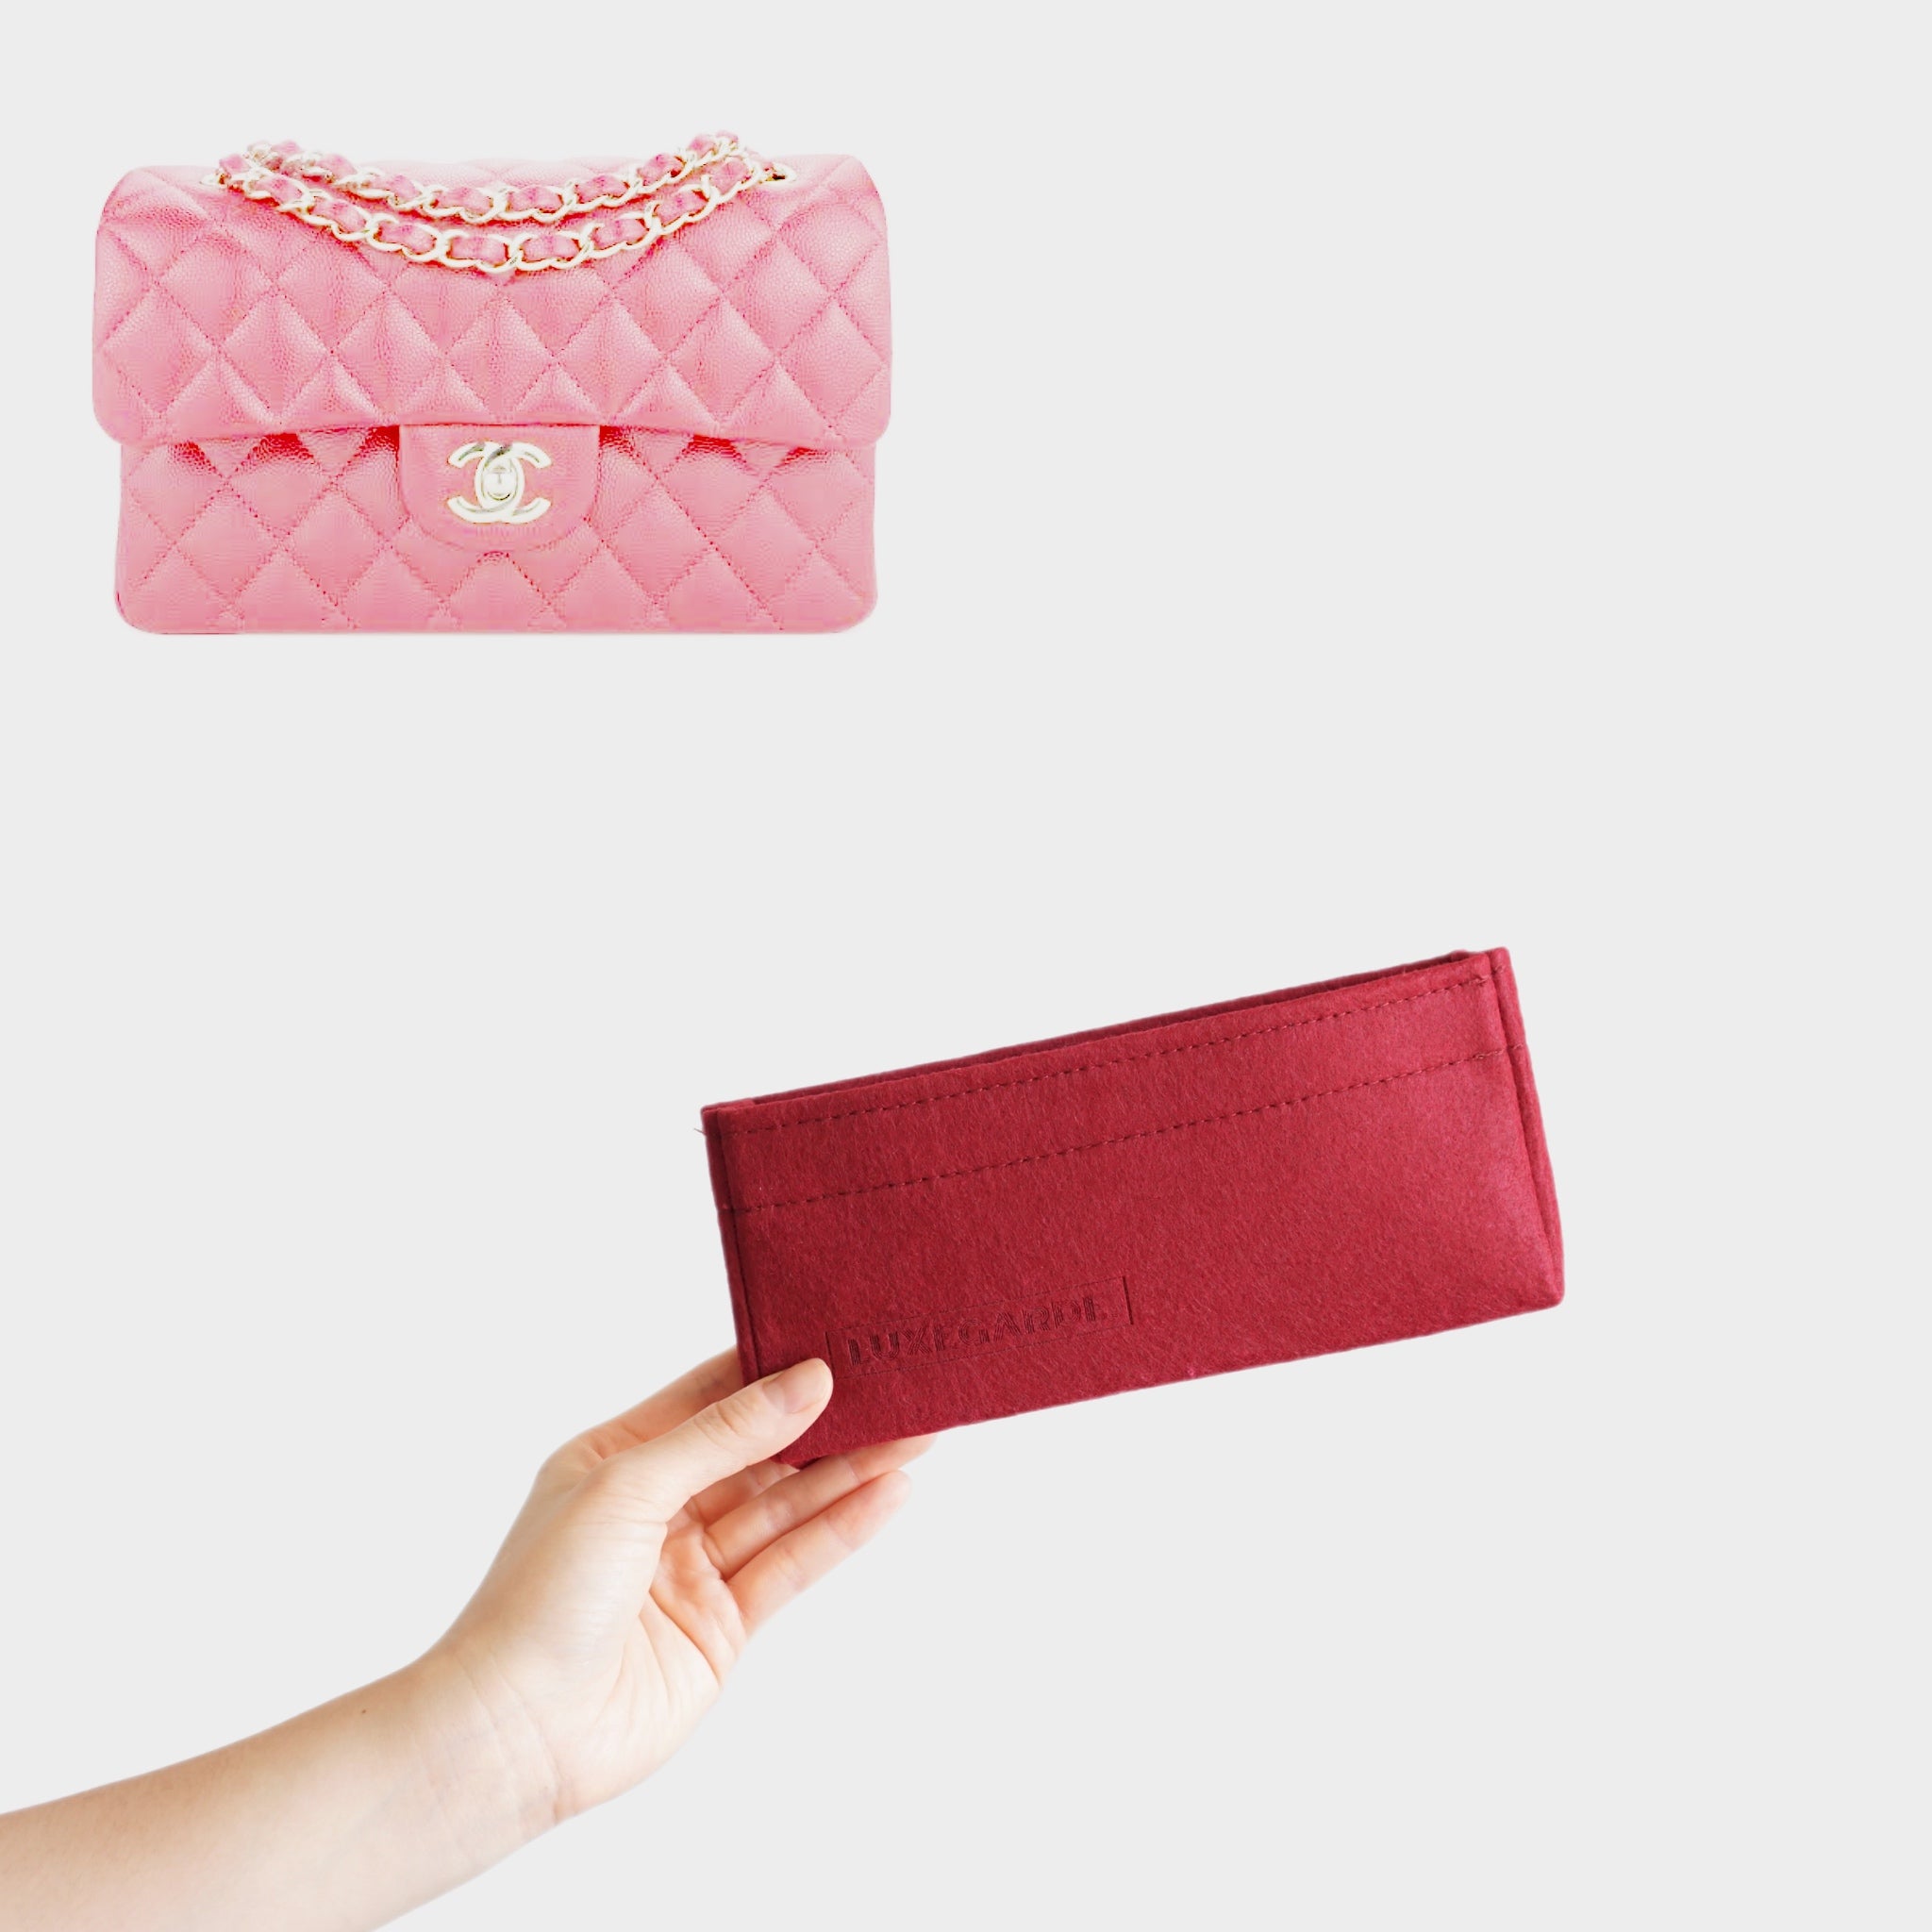 Chanel Timeless Classic Mini Flap handbags: A friendly comparison